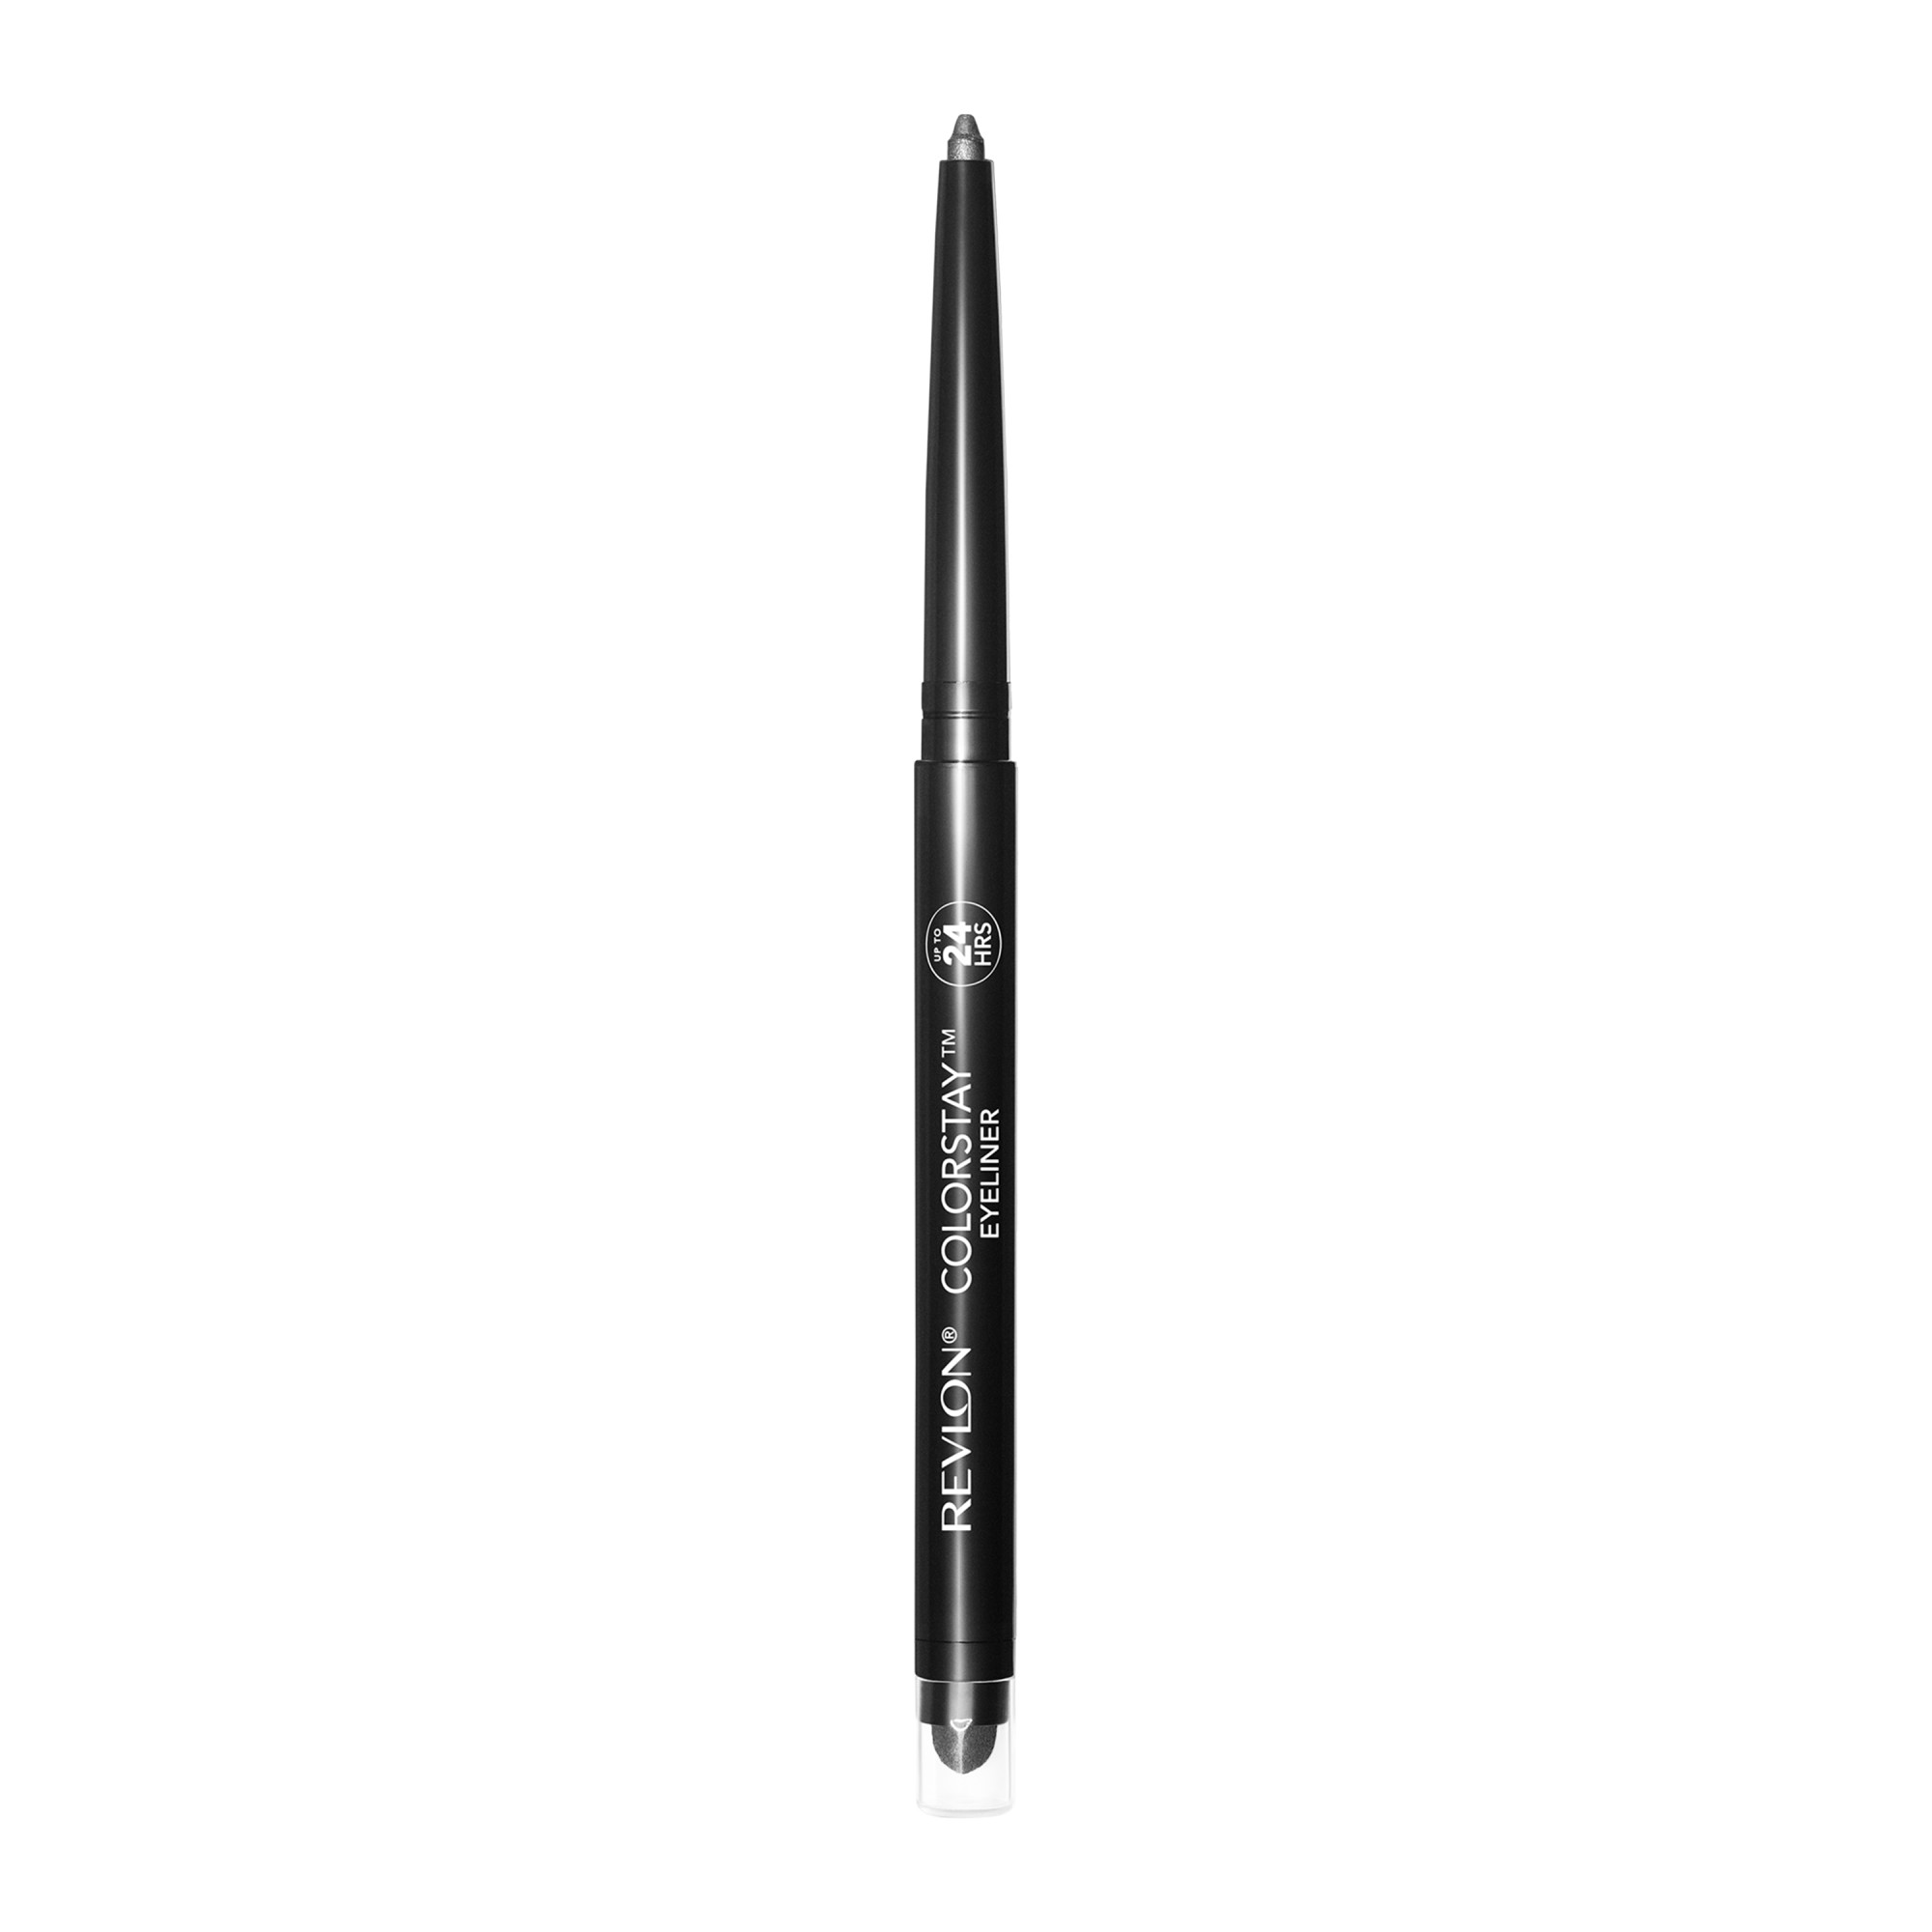 Revlon ColorStay Waterproof Eyeliner Pencil, 24HR Wear, Built-in Sharpener, 204 Charcoal, 0.01 oz - image 3 of 9